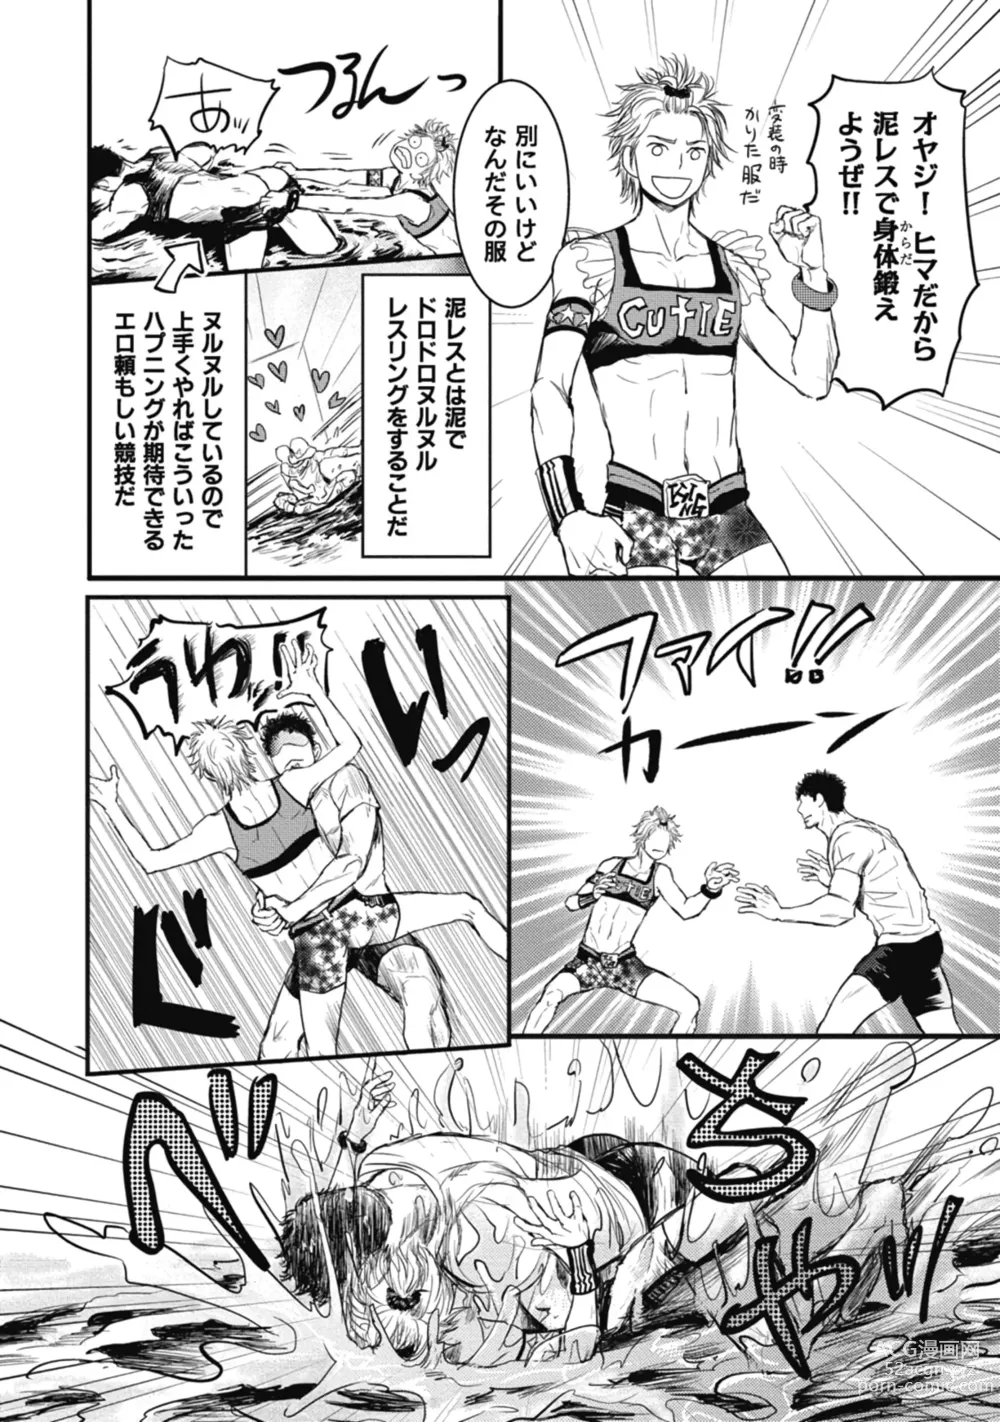 Page 158 of manga Papas Assassin. ~Futari Shite Tonde Yuku.~